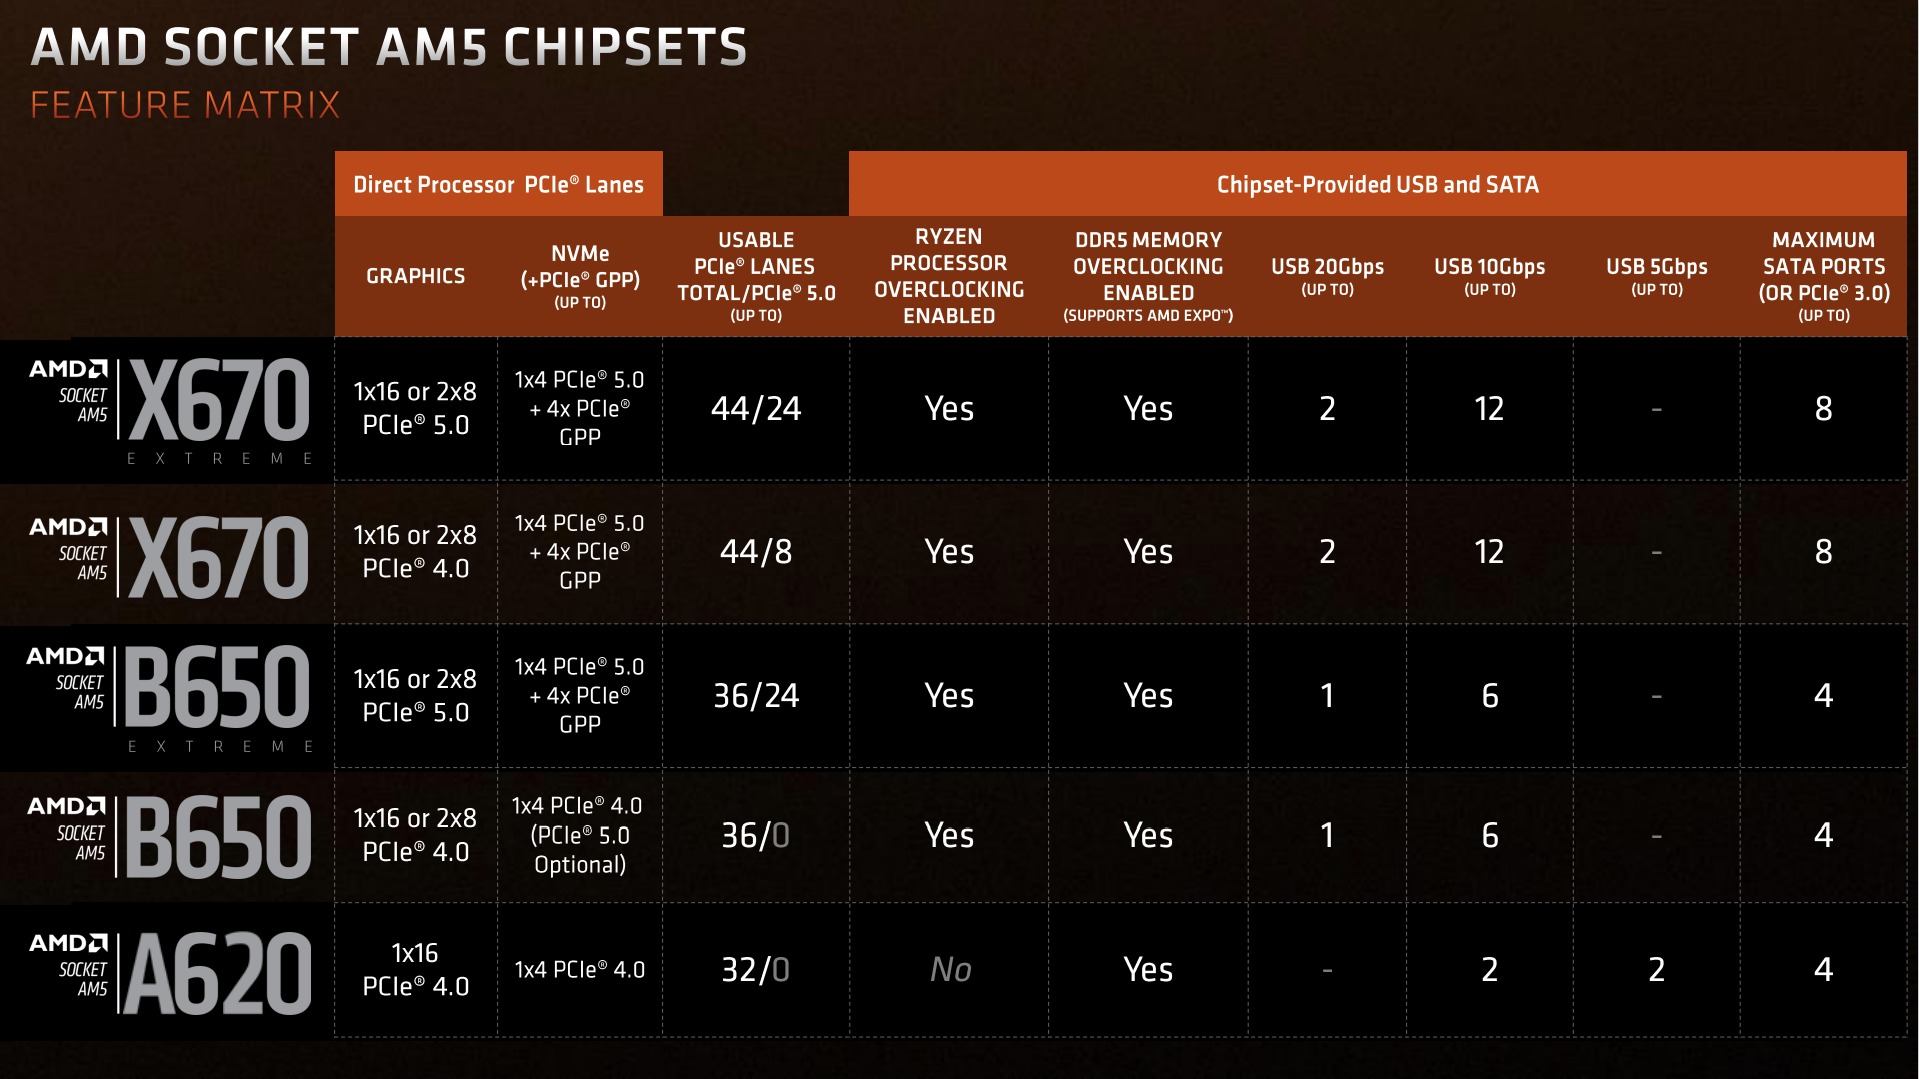 AMD-A620-chipset-2.jpg